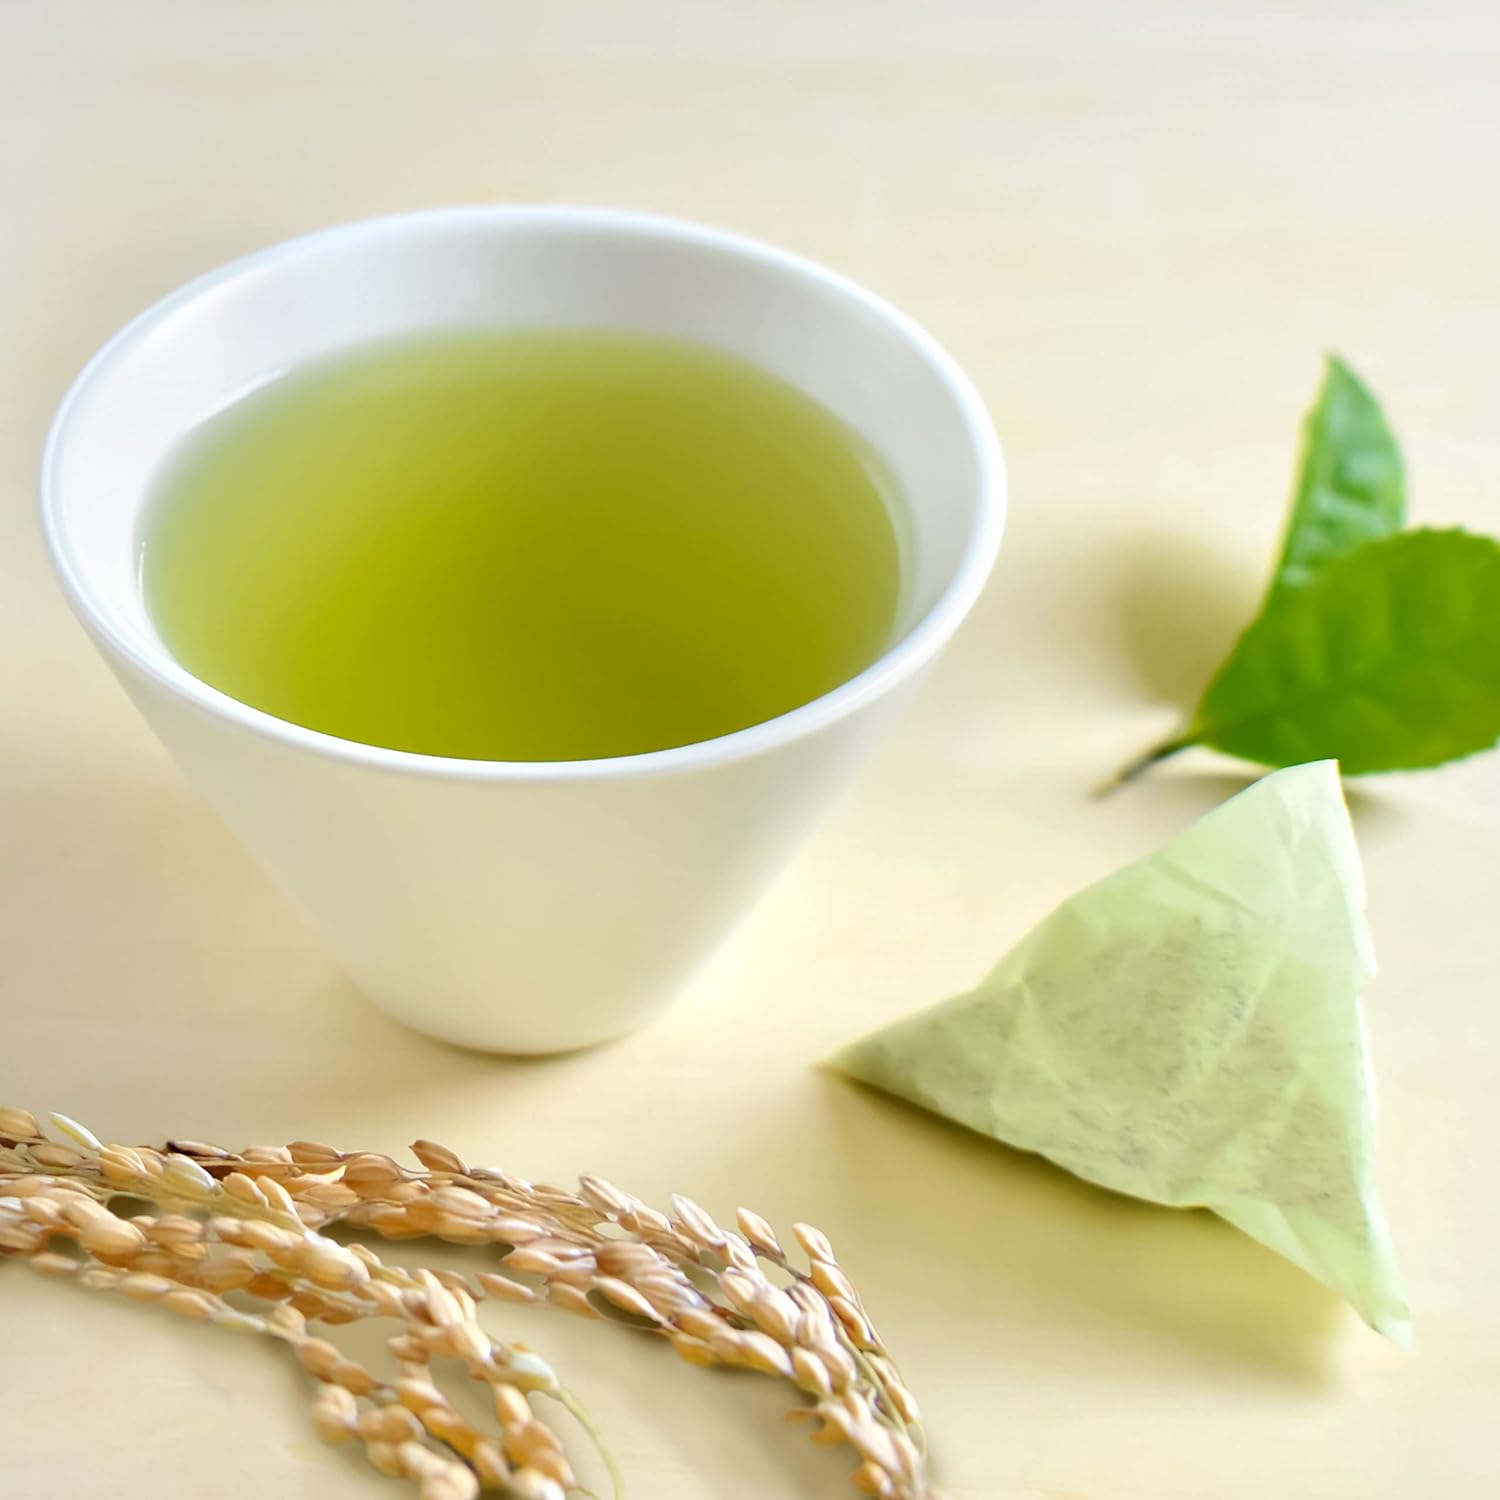 Genmaicha Green Tea 3g×60bags